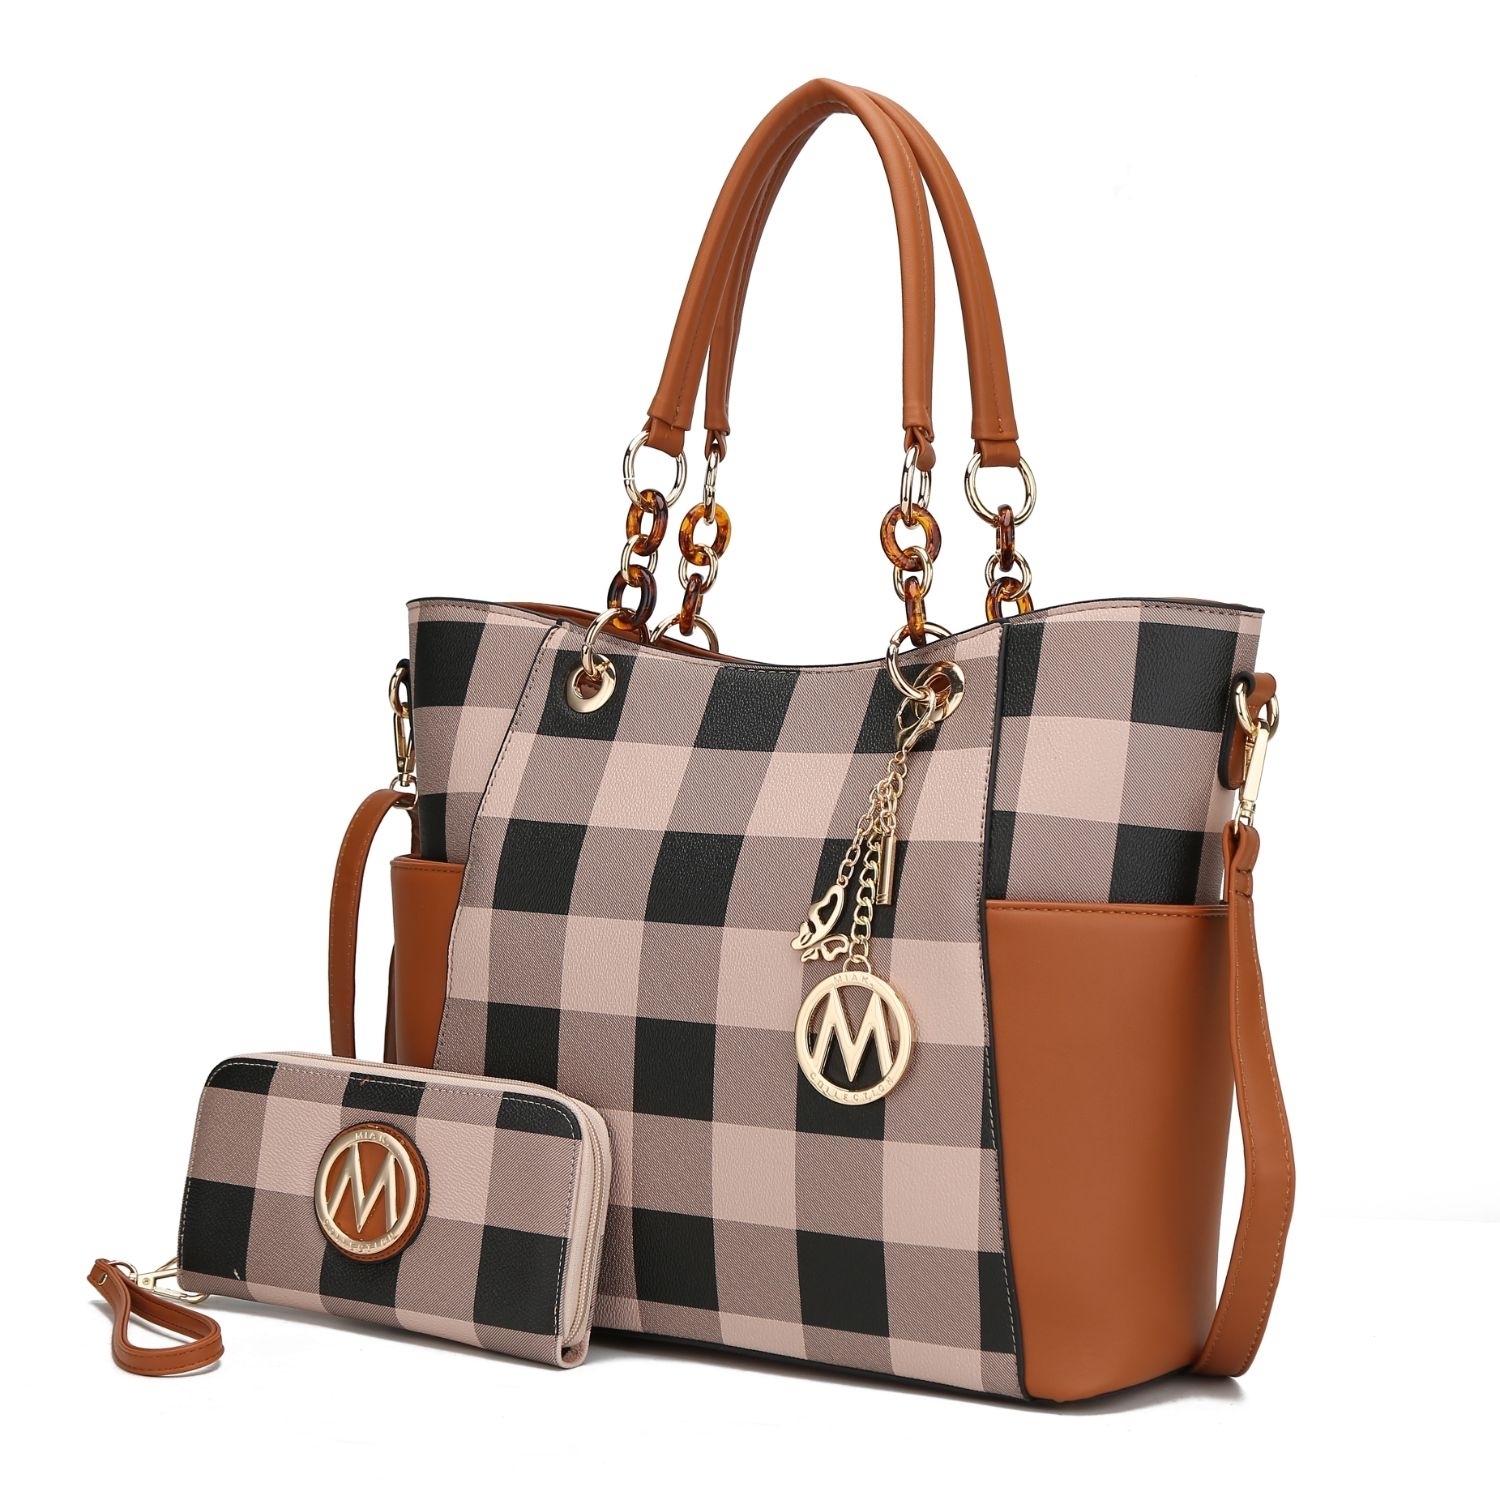 Bonita Checkered Tote 2 Pcs Wome's Large Handbag With Wallet And Decorative M Keychain By Mia K. - Navy